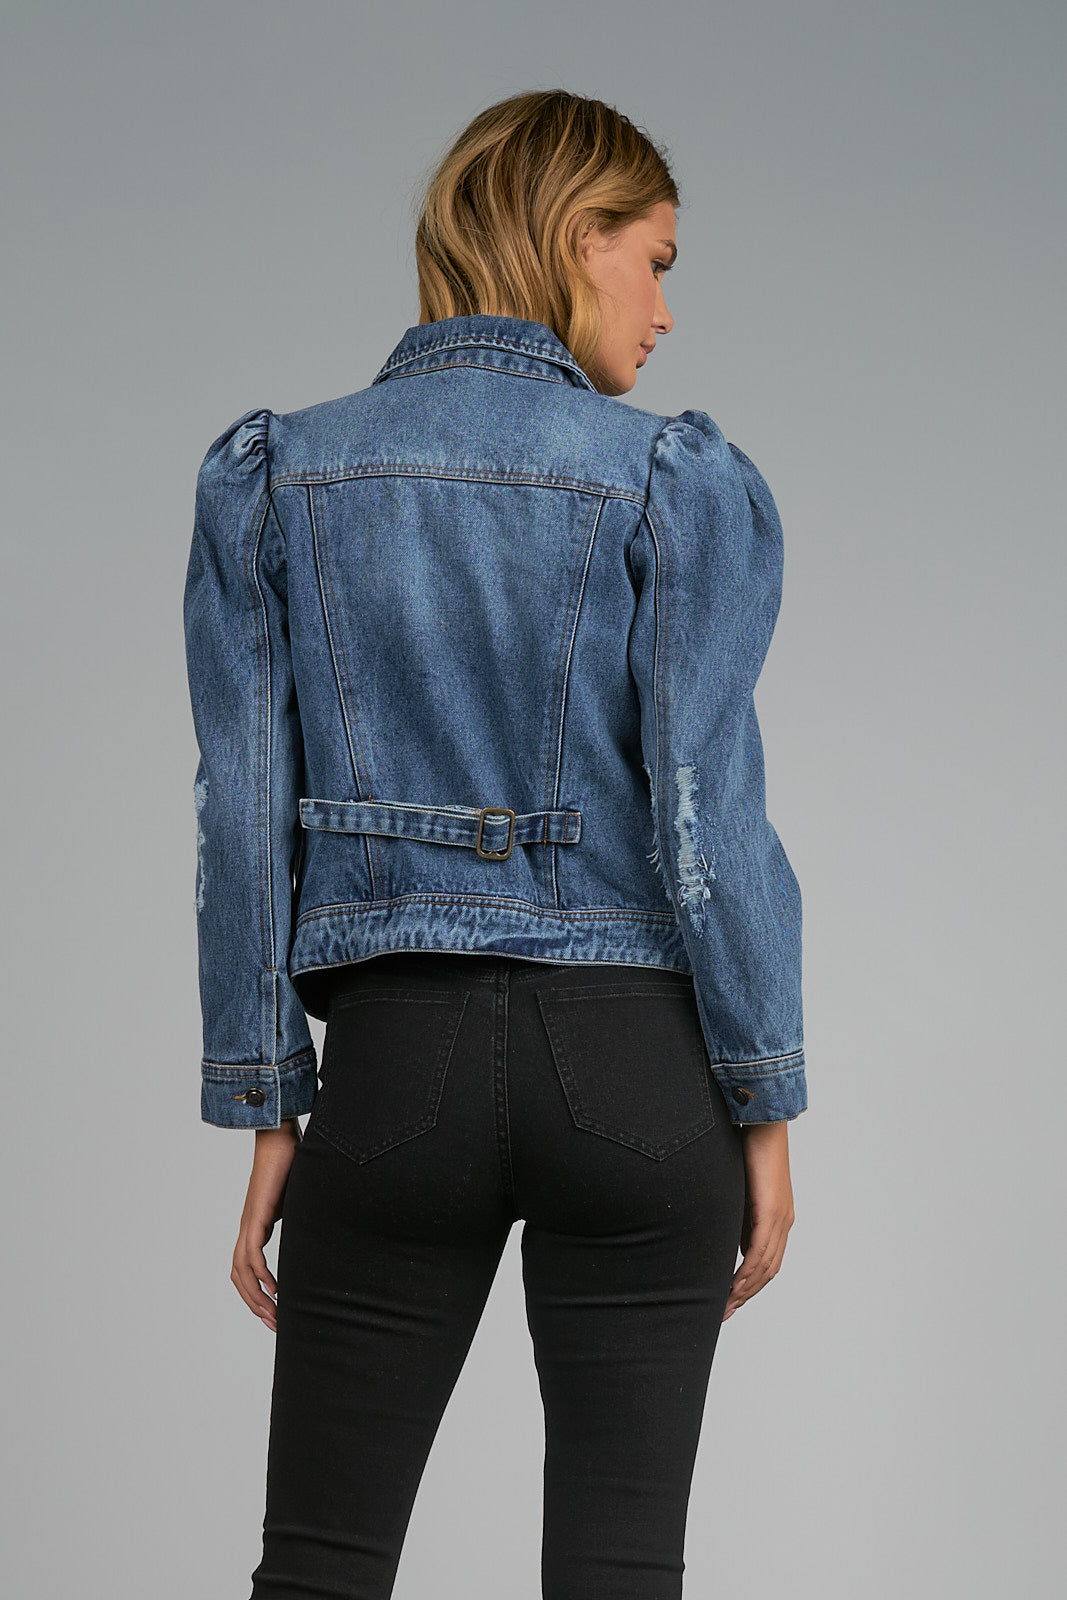 Elan Puffed Sleeve Jeans Jacket-Indigo